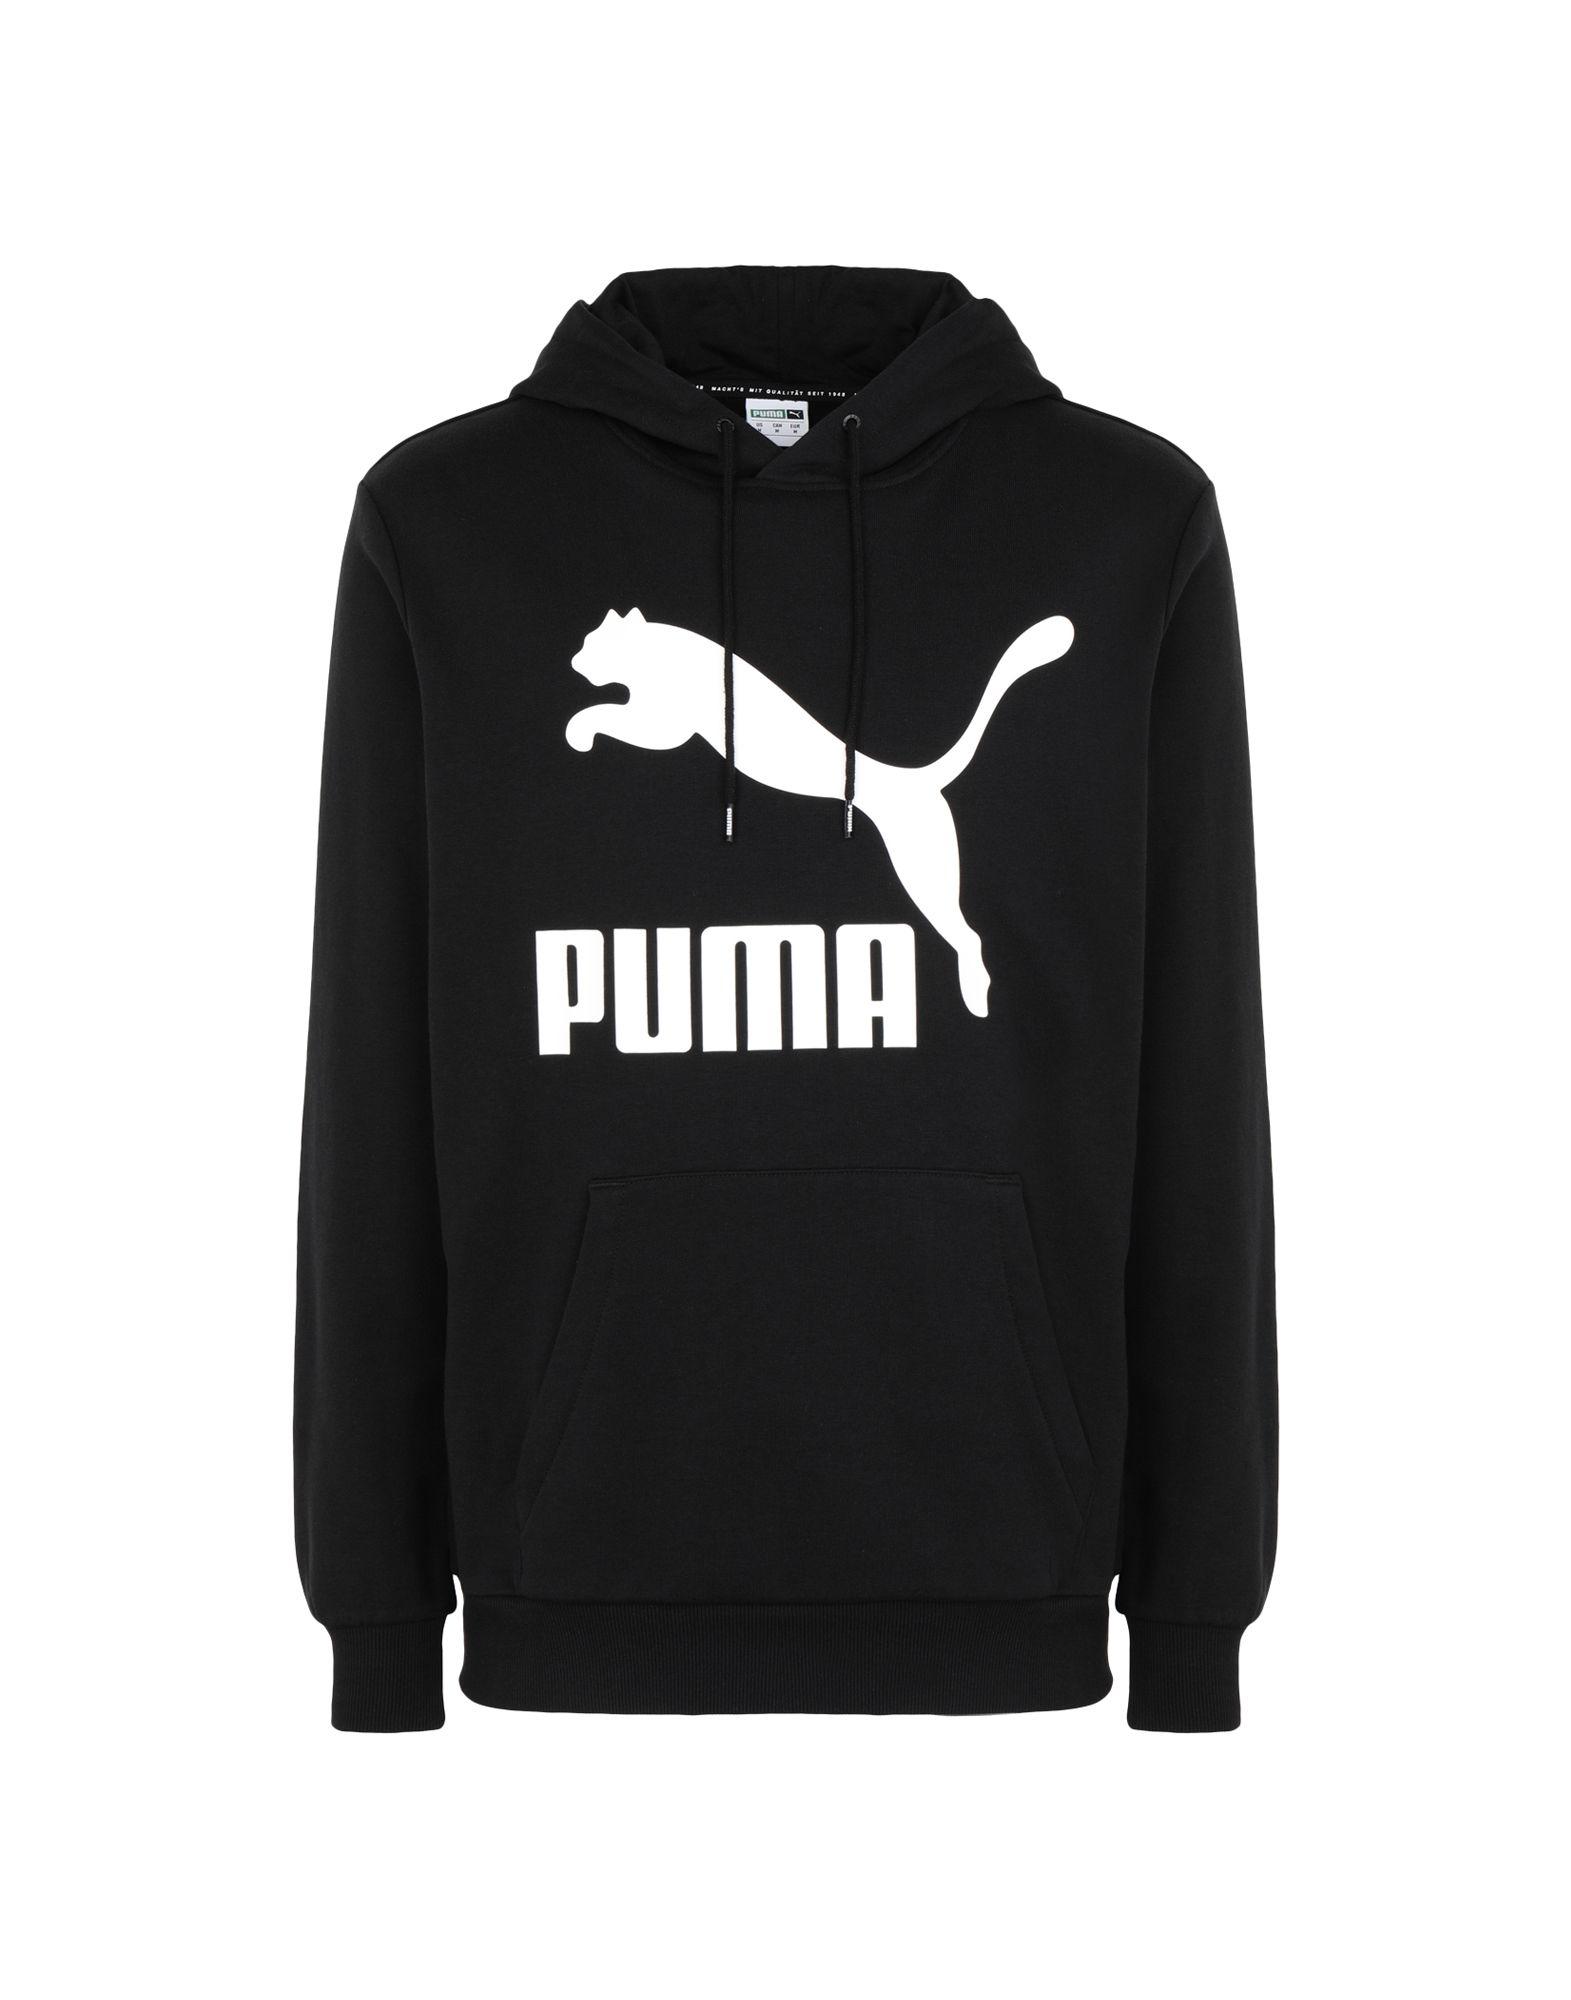 PUMA Cotton Sweatshirt in Black for Men - Lyst